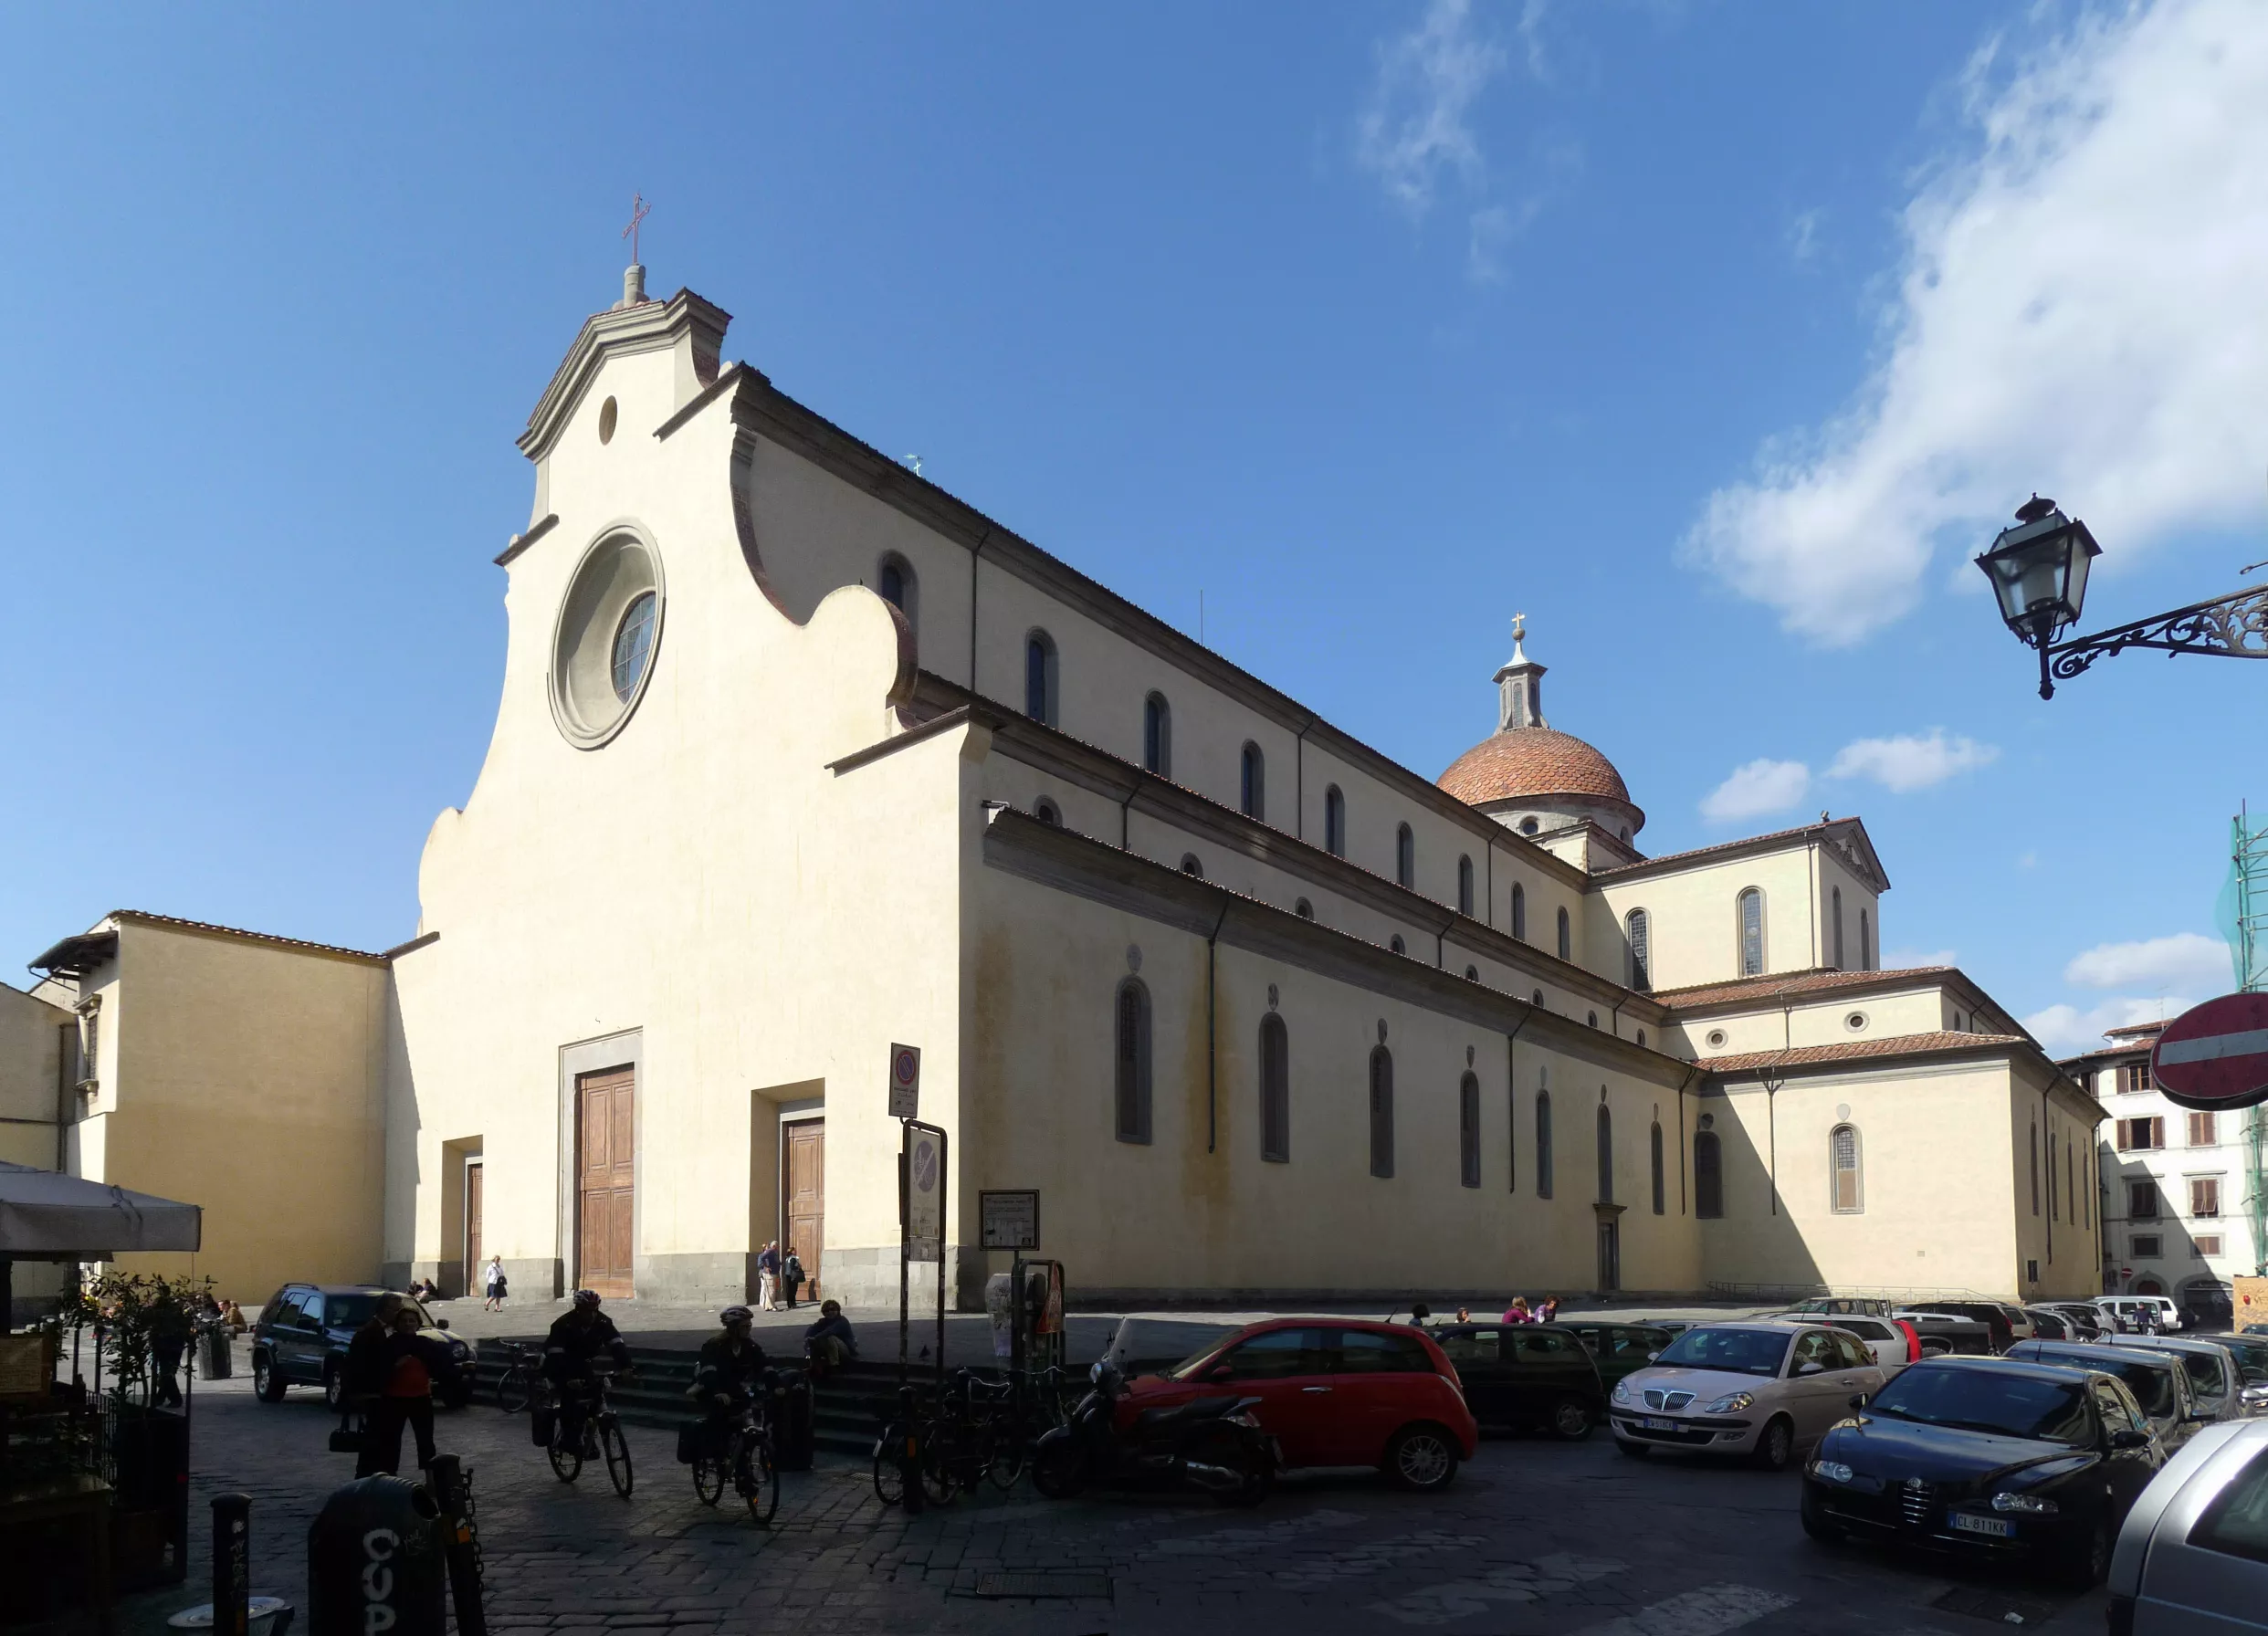 Santo Spirito in Italy, Europe | Architecture - Rated 3.8